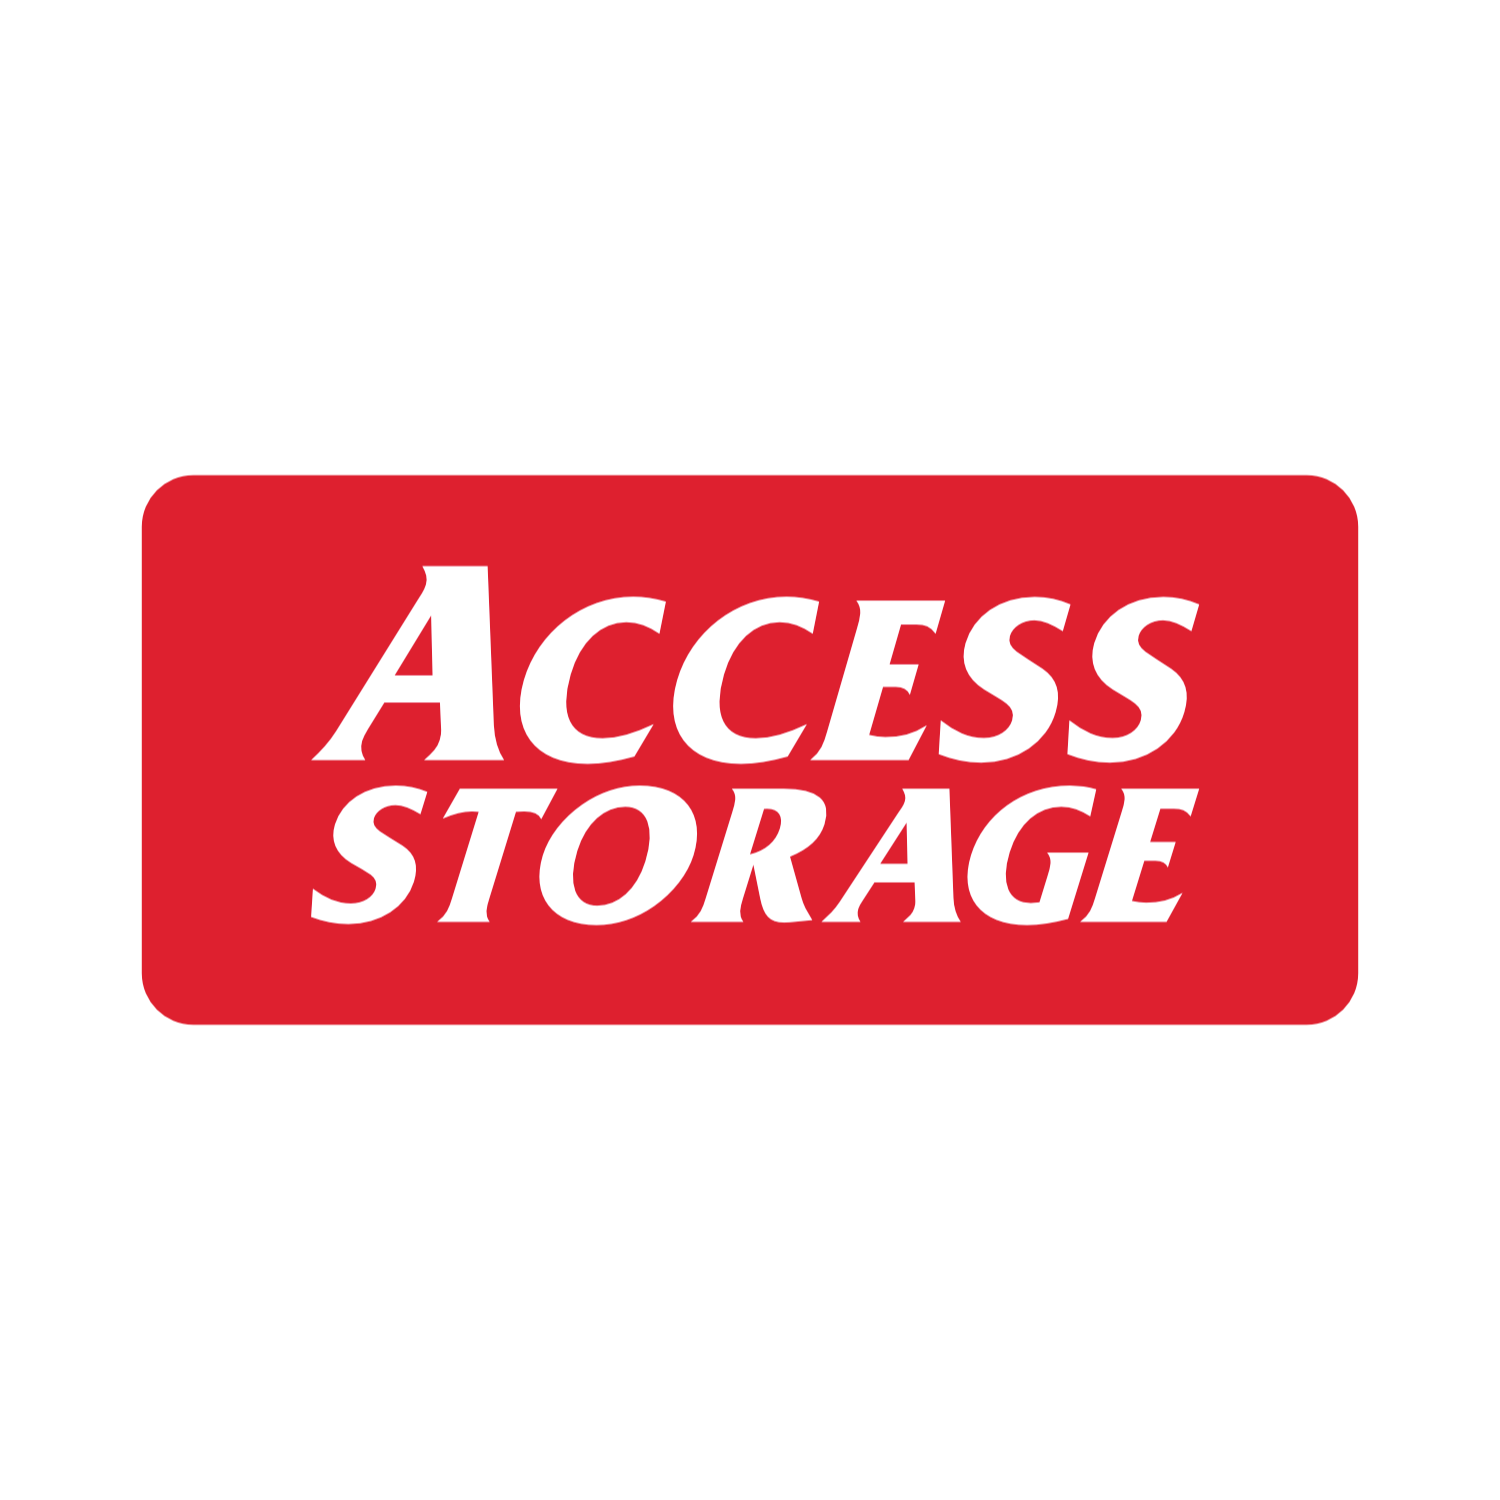 Access Storage - Moose Jaw - North (Self-Serve) Logo